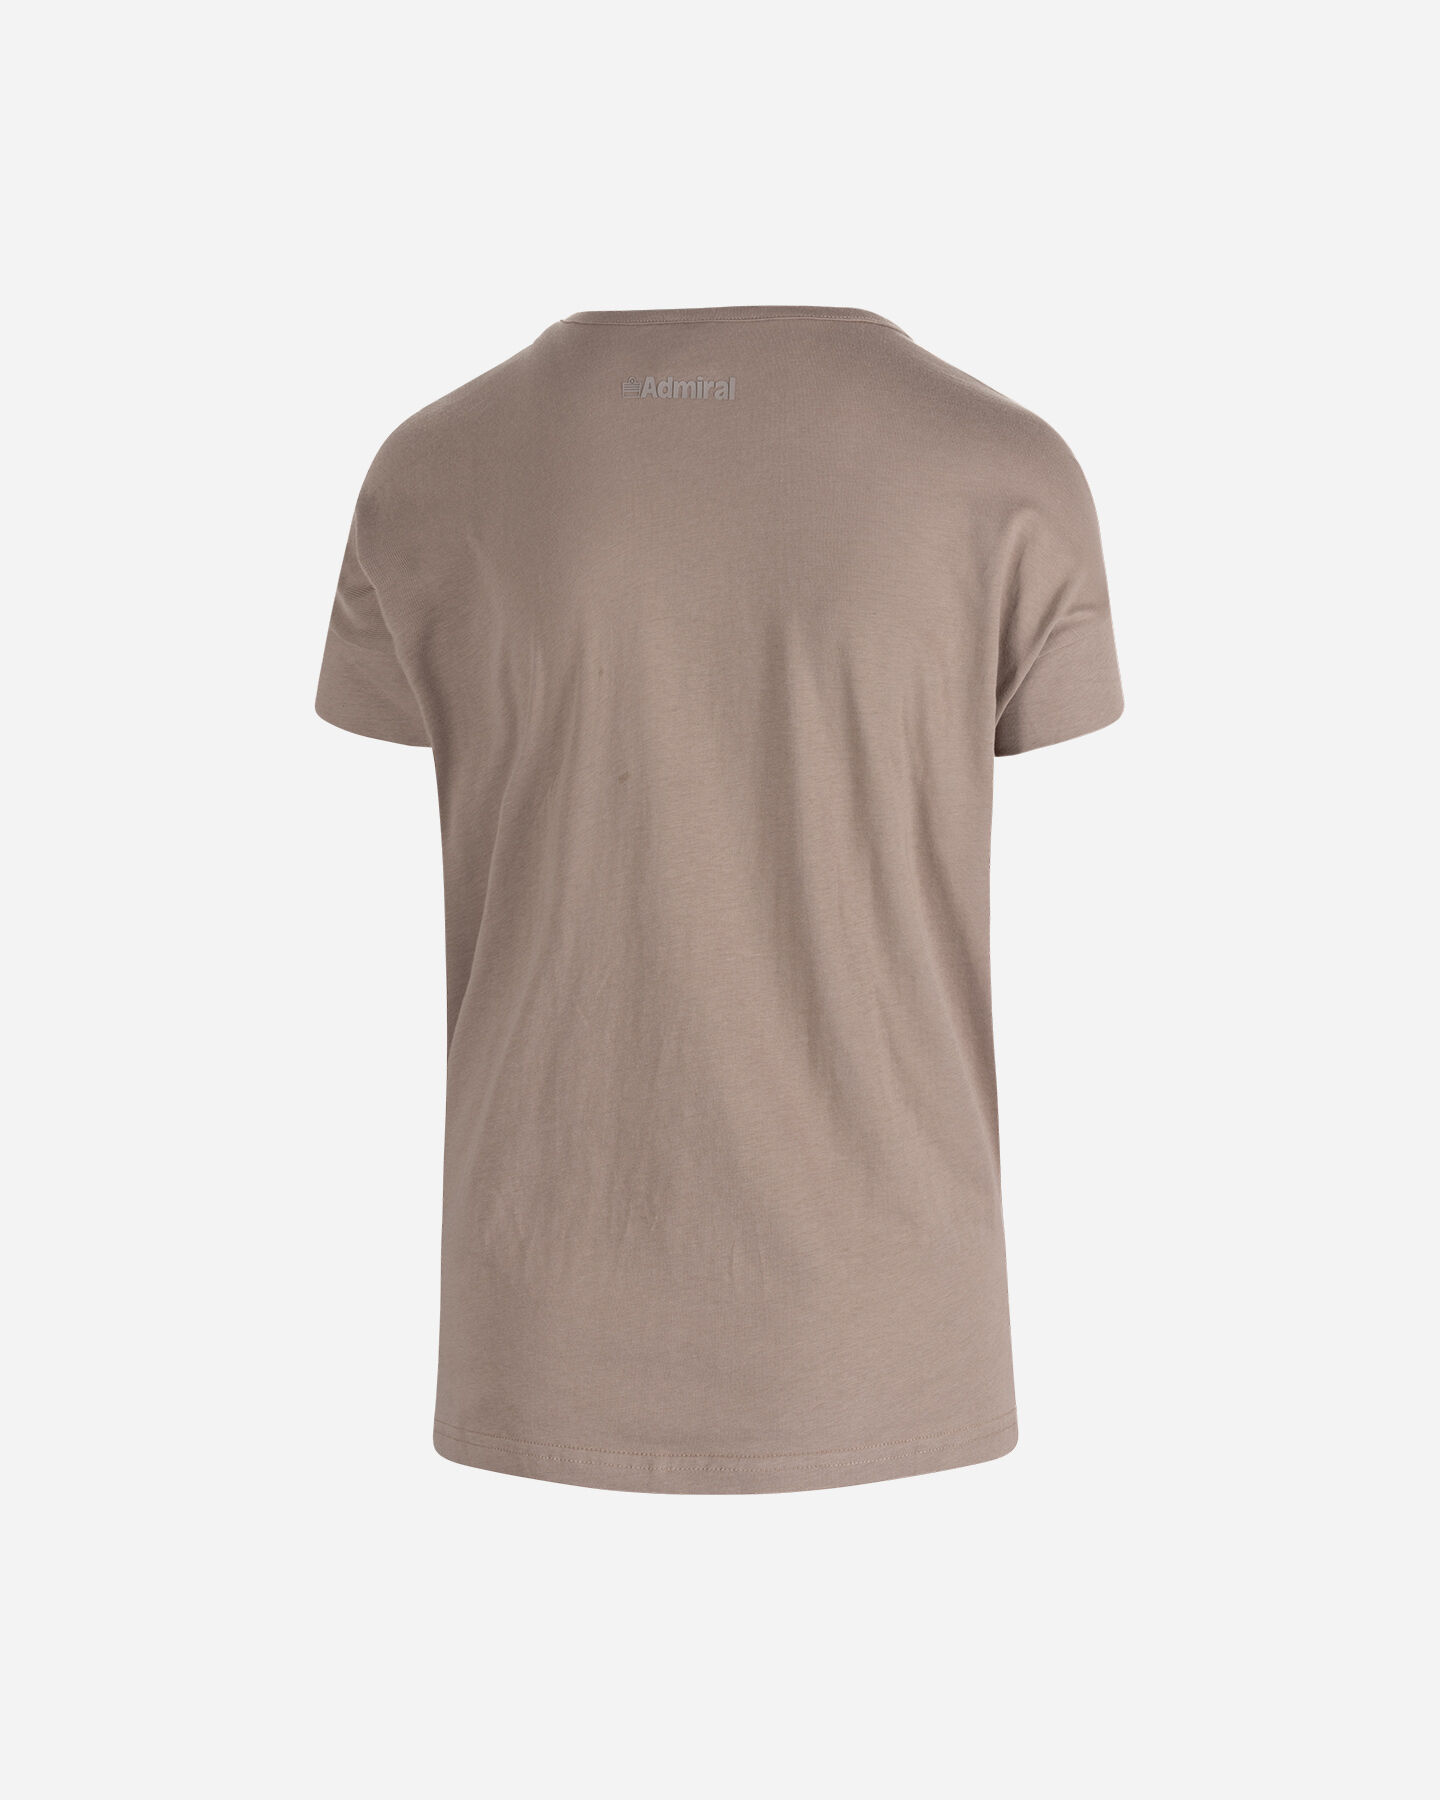  T-Shirt ADMIRAL CLASSIC W S4119411|168|XL scatto 1